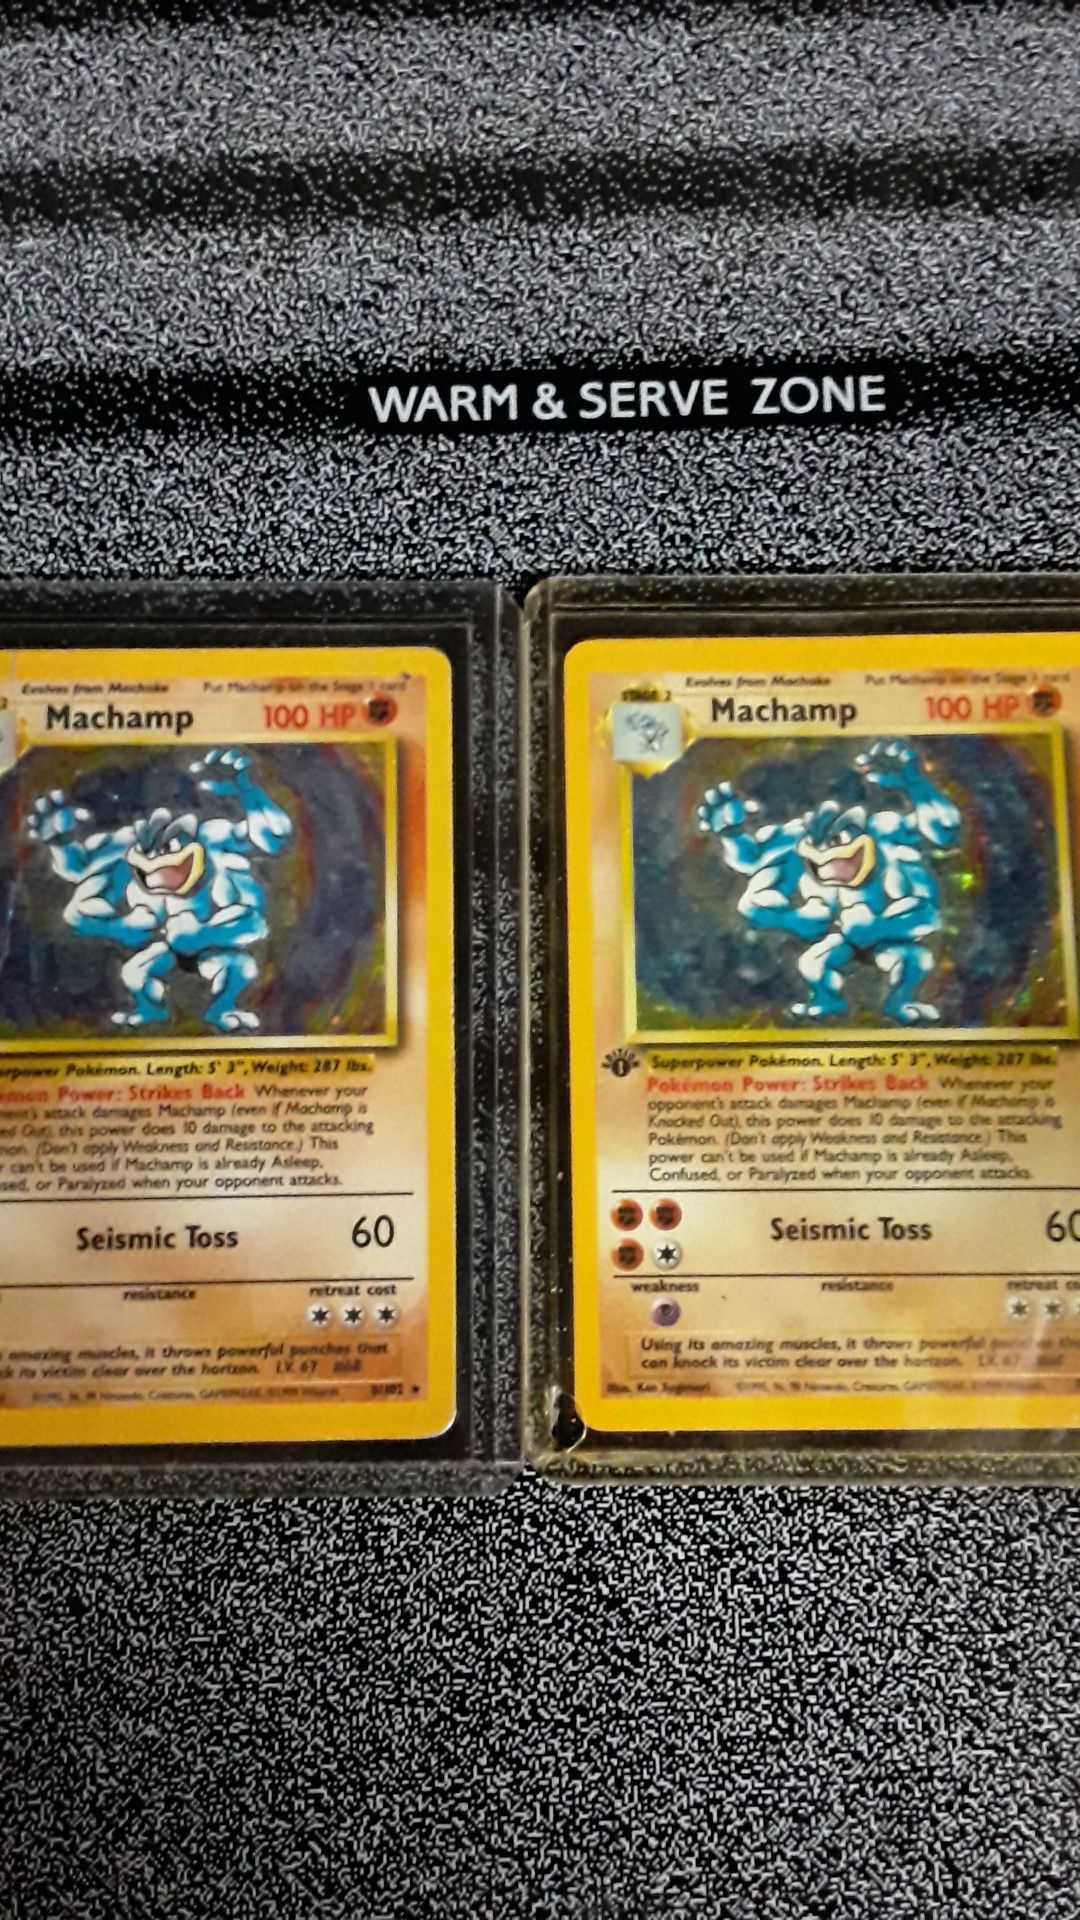 2 original MaChamps pokemon